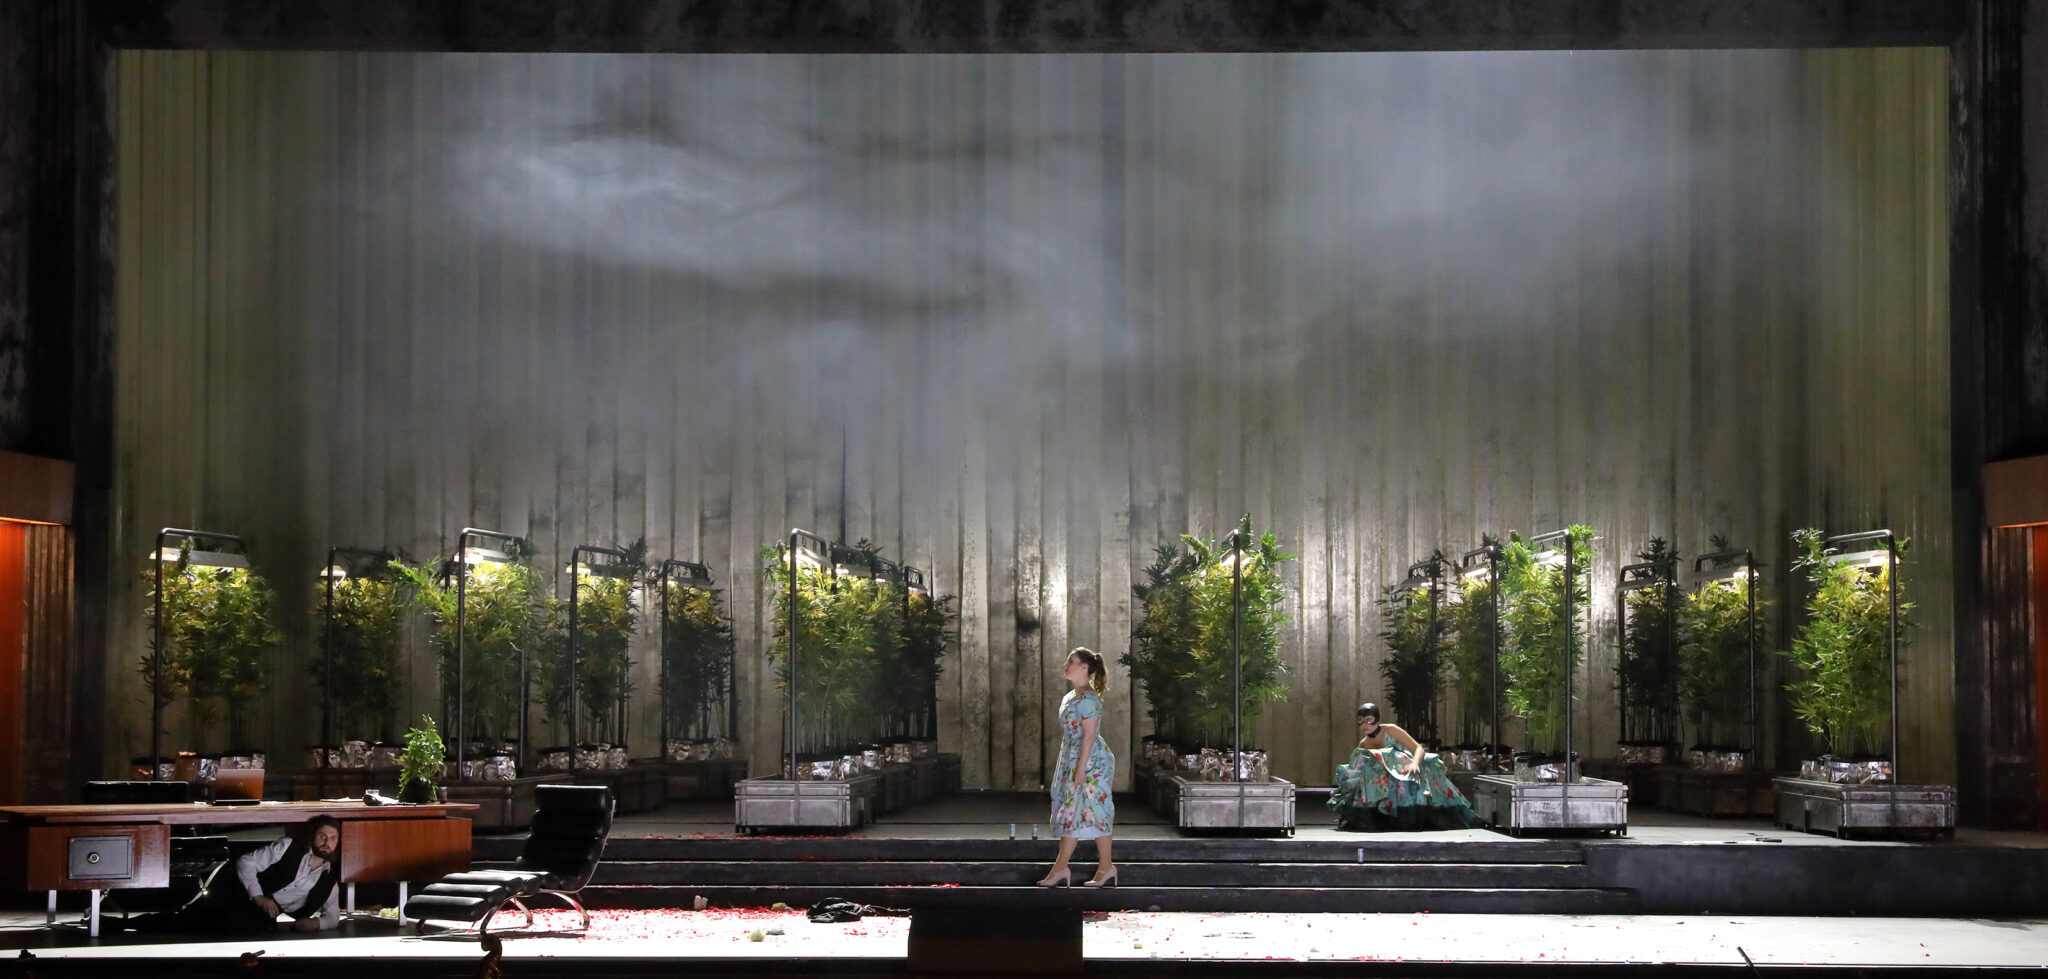 Szenenbild aus „Le nozze di Figaro“ an der Bayerischen Staatsoper München